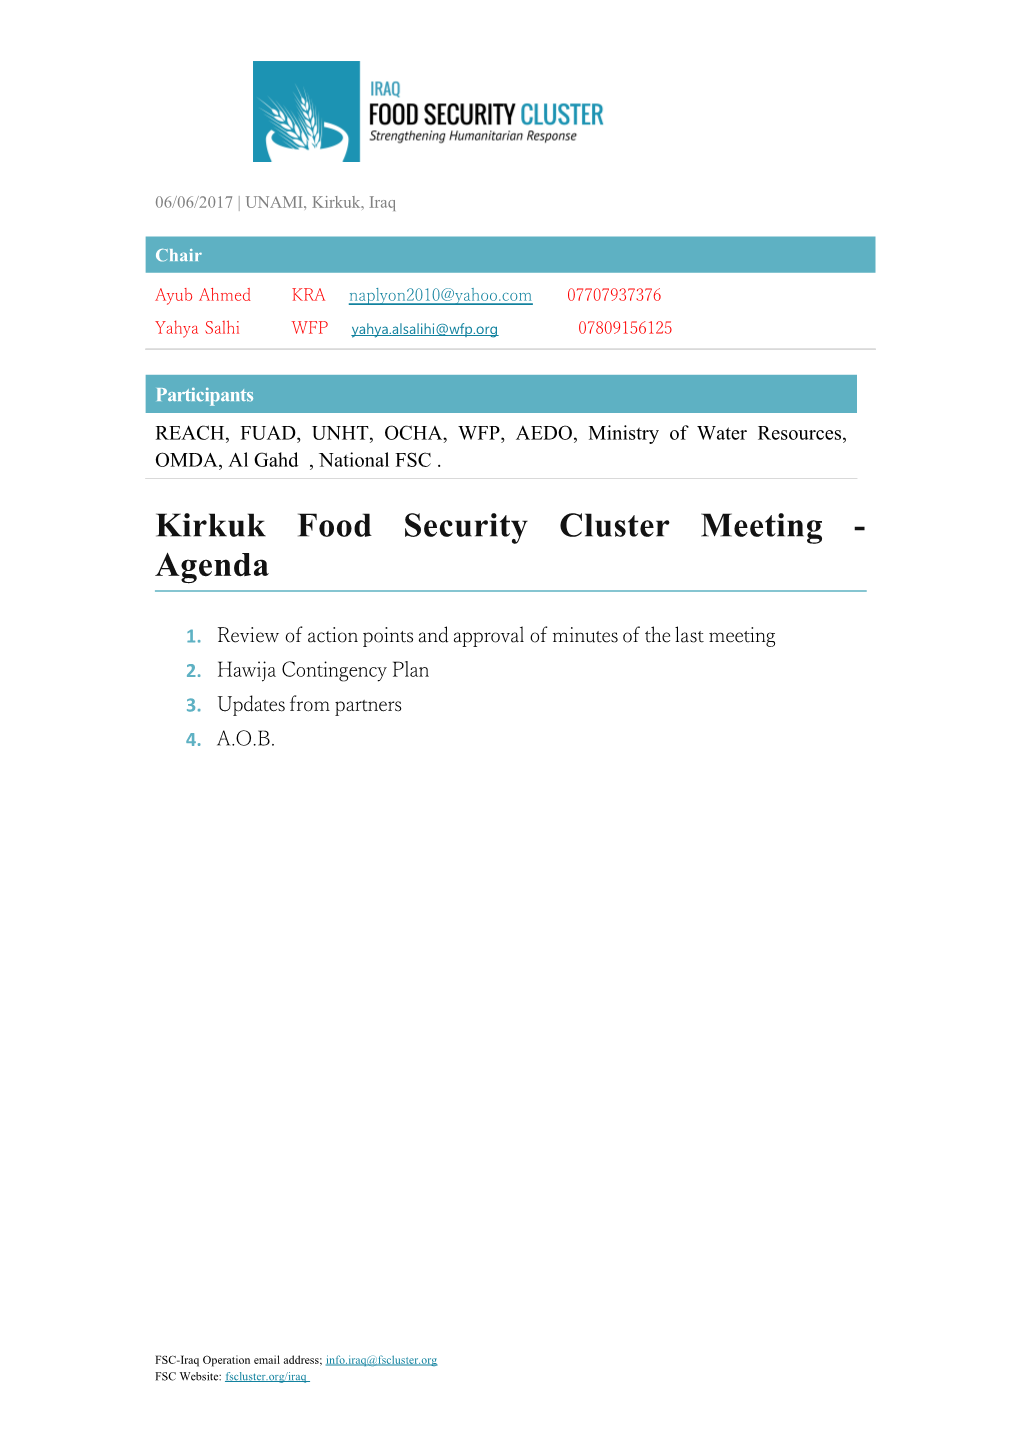 Kirkuk Food Security Cluster Meeting - Agenda